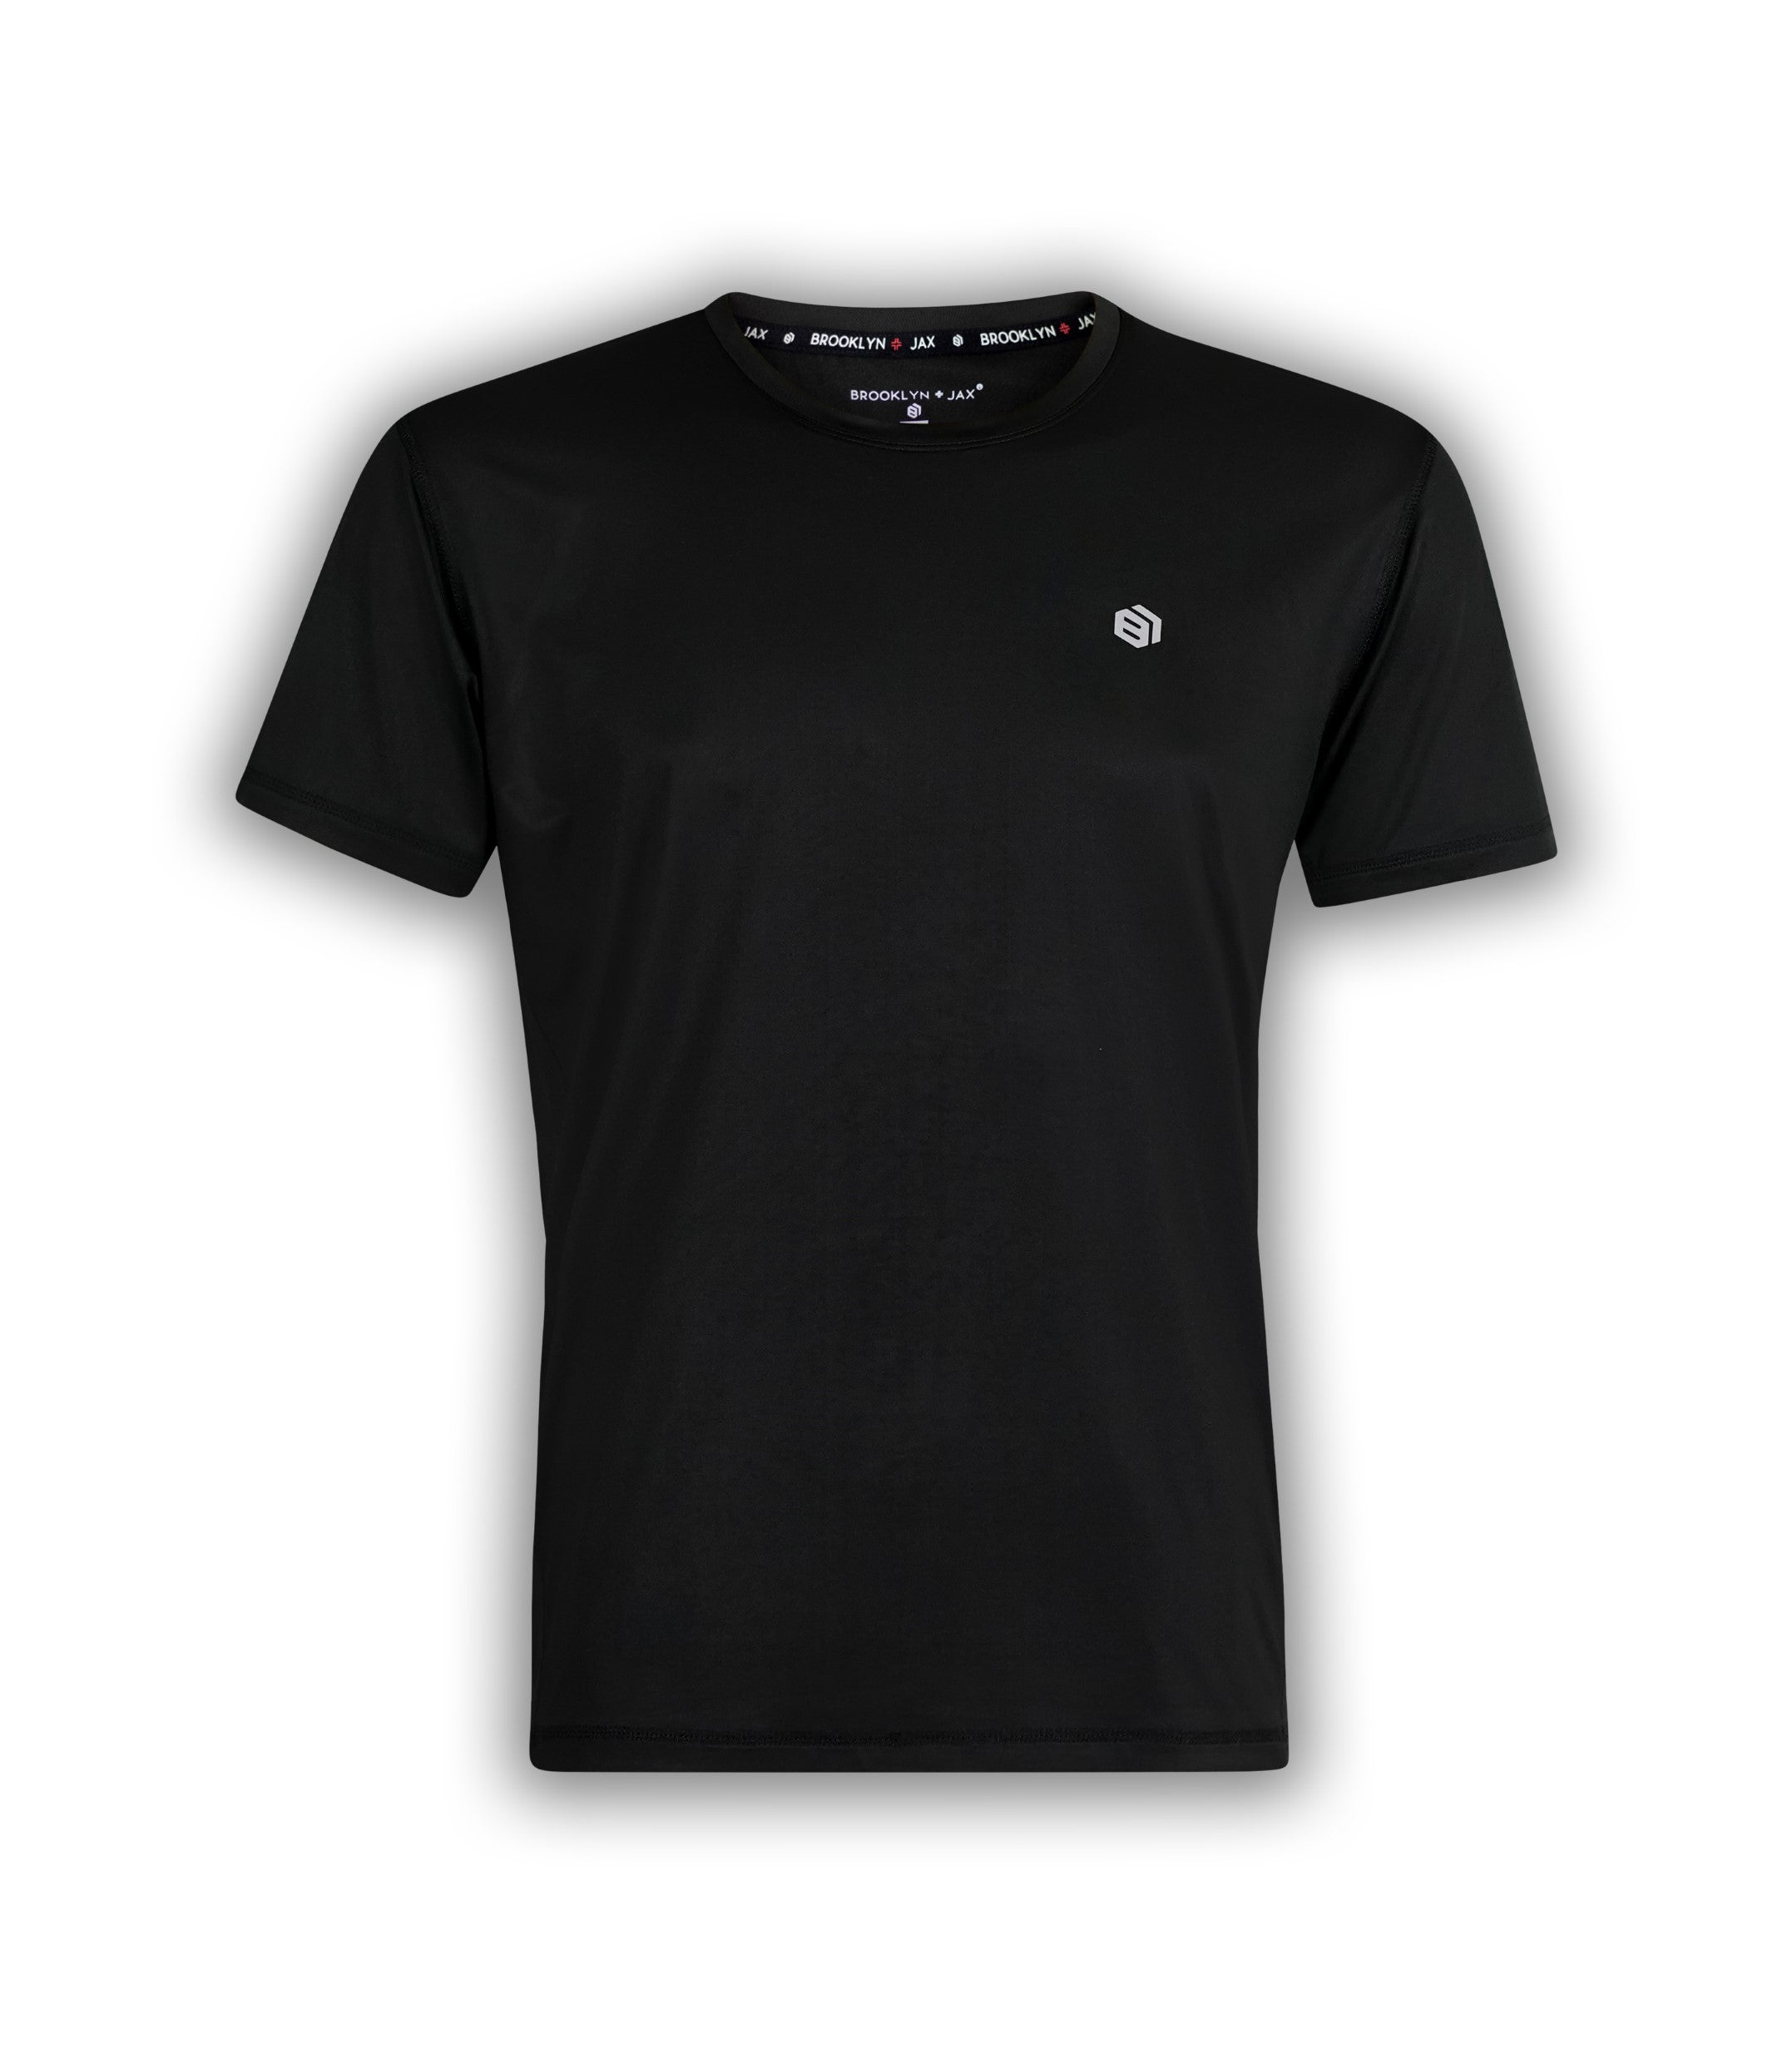 Men's Dry-Fit Active Crew Neck Compression T-Shirts | 5 Pack